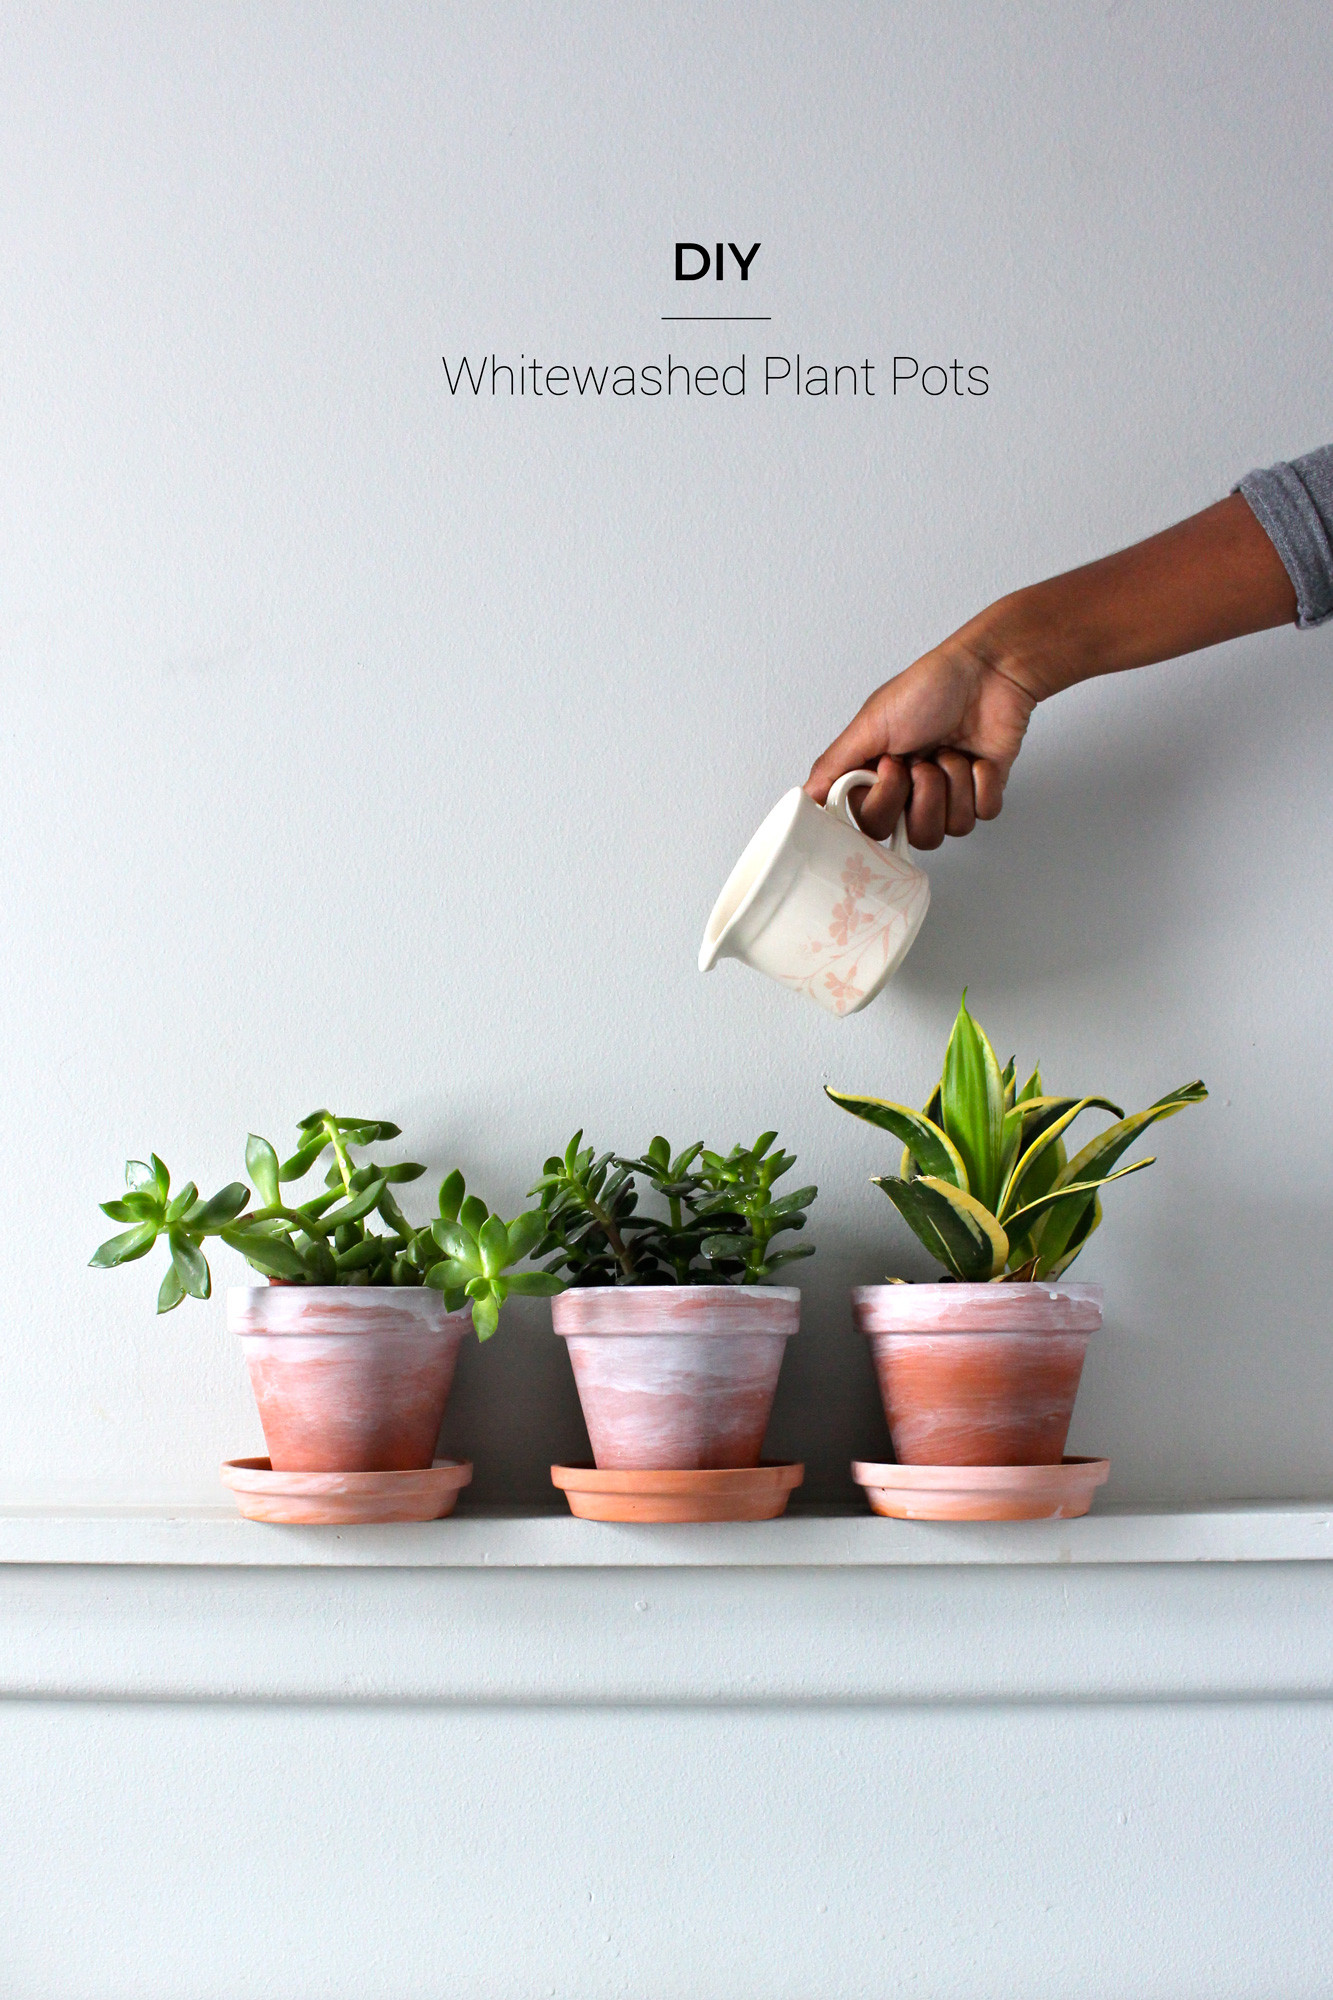 Best ideas about DIY Plants Pots
. Save or Pin DIY Whitewashed Plant Pots Now.